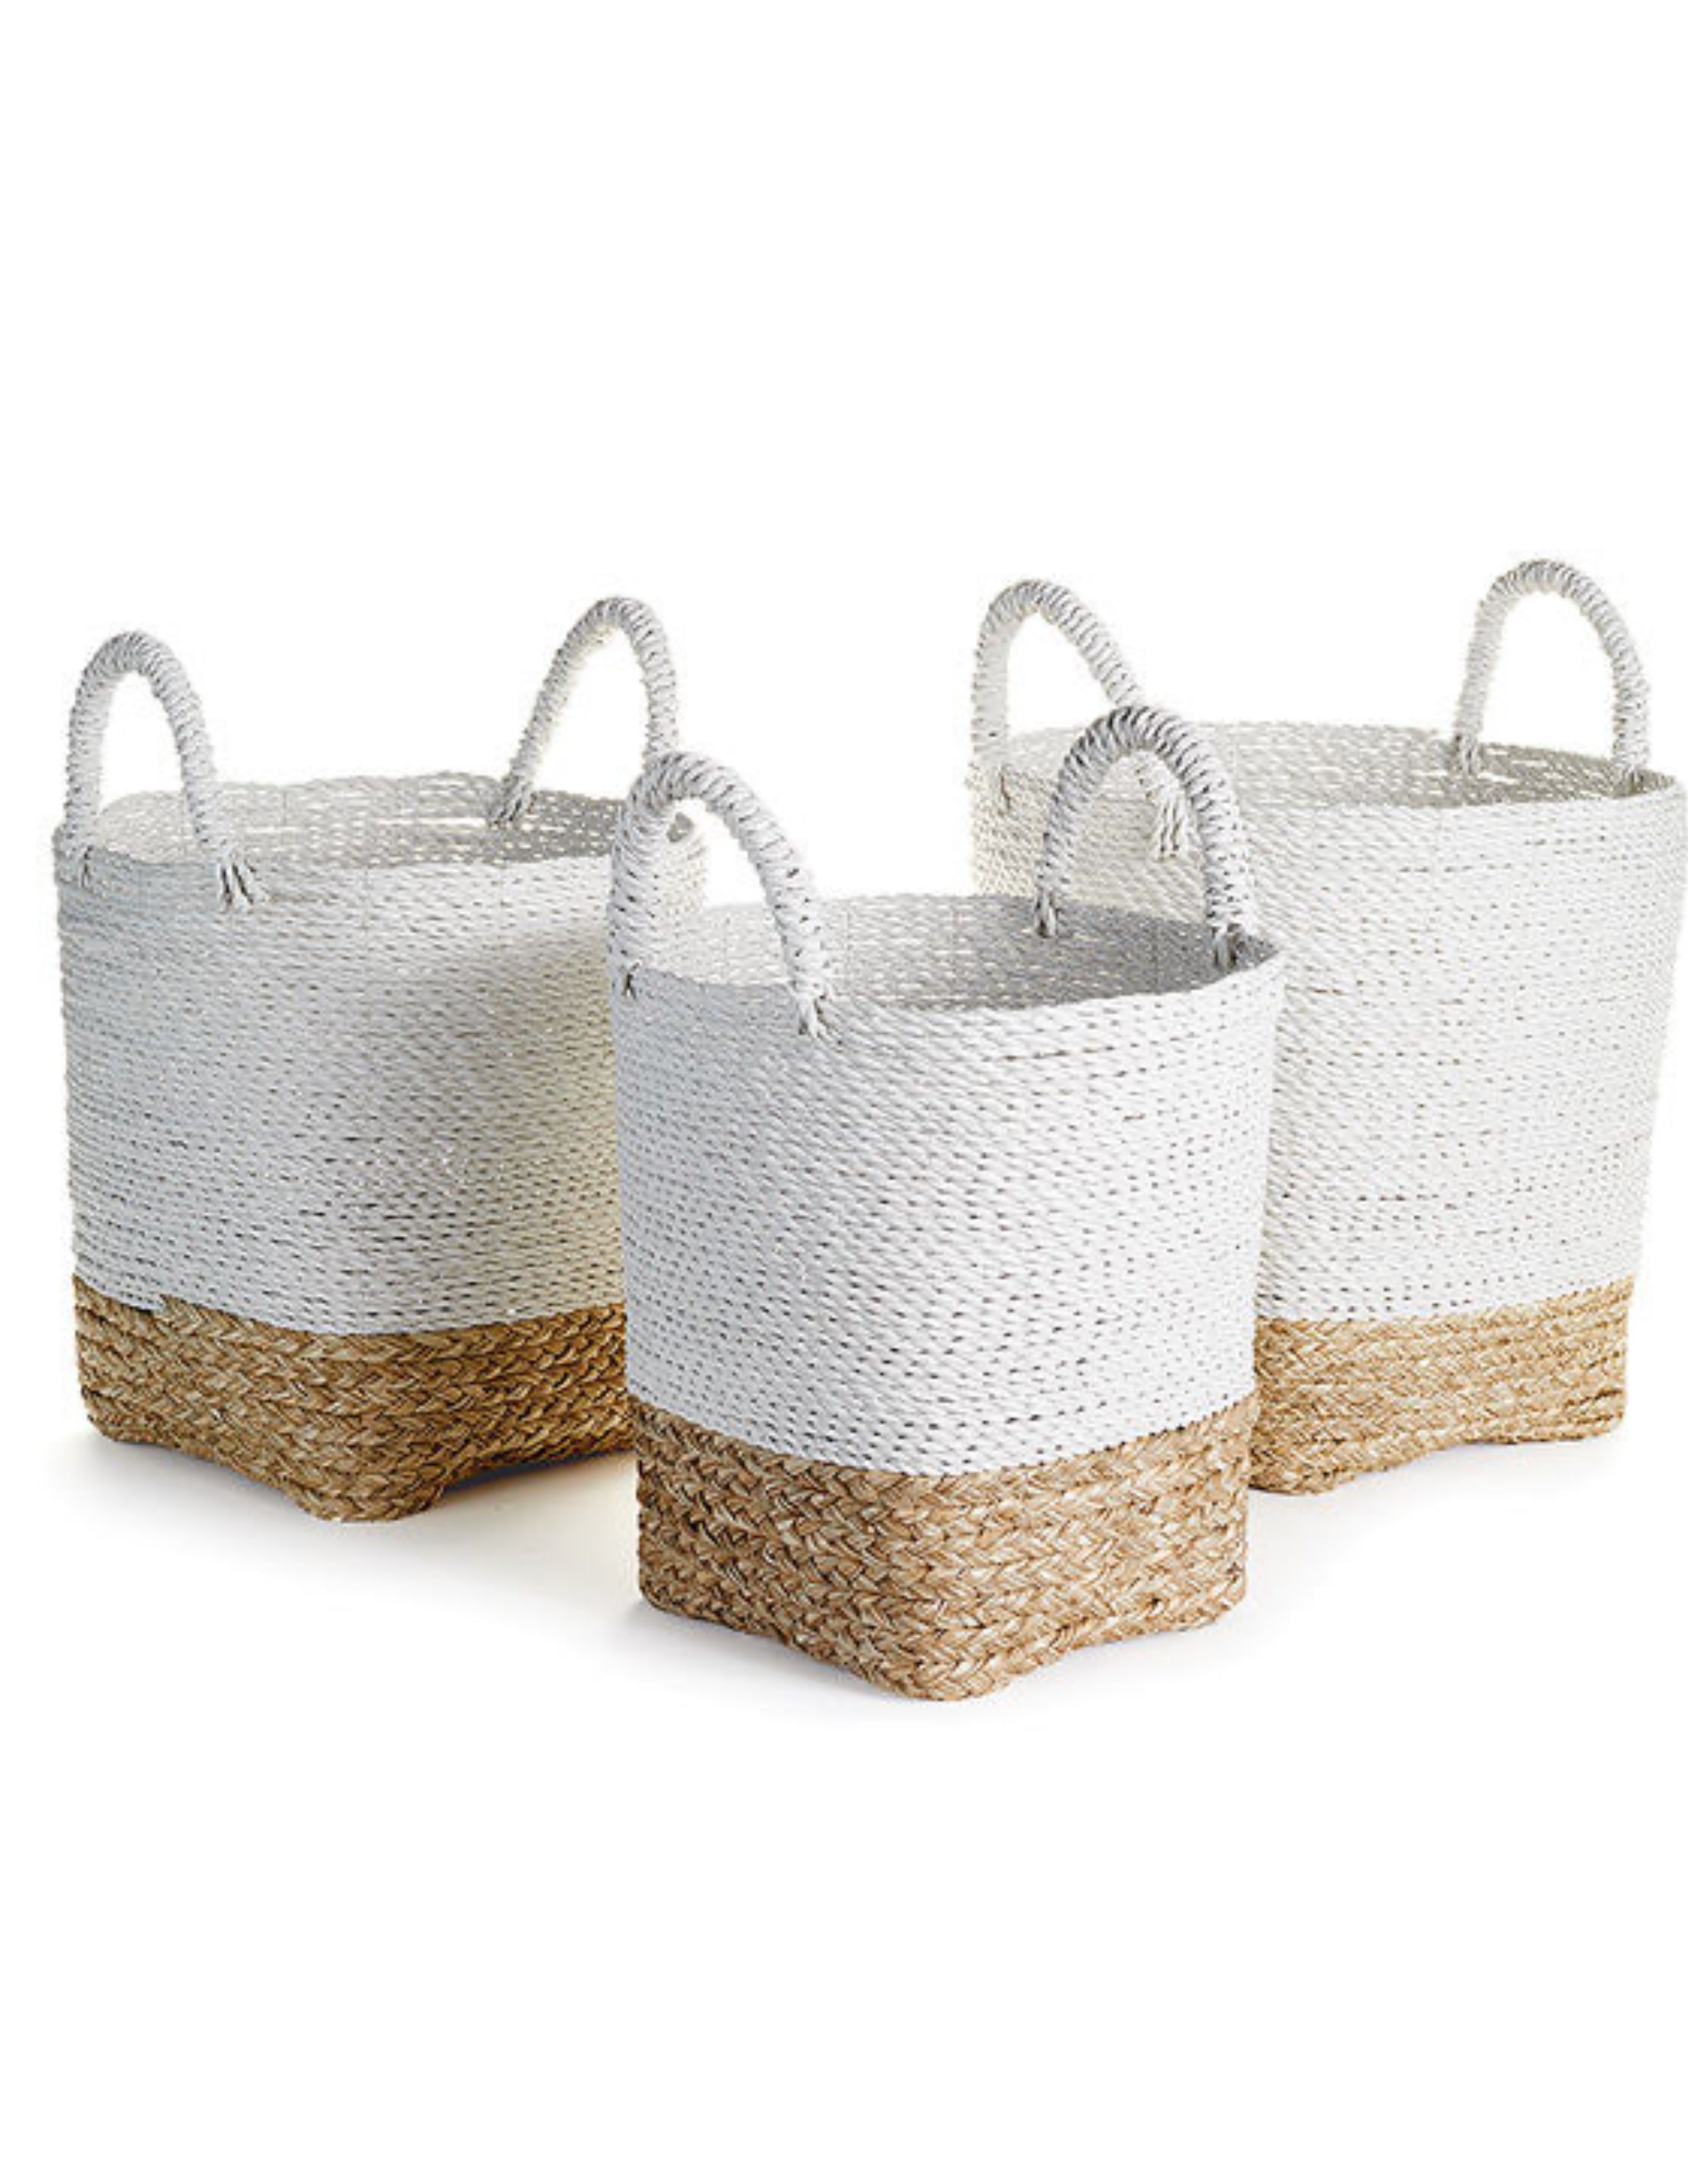 Madura Market Baskets Set of 3